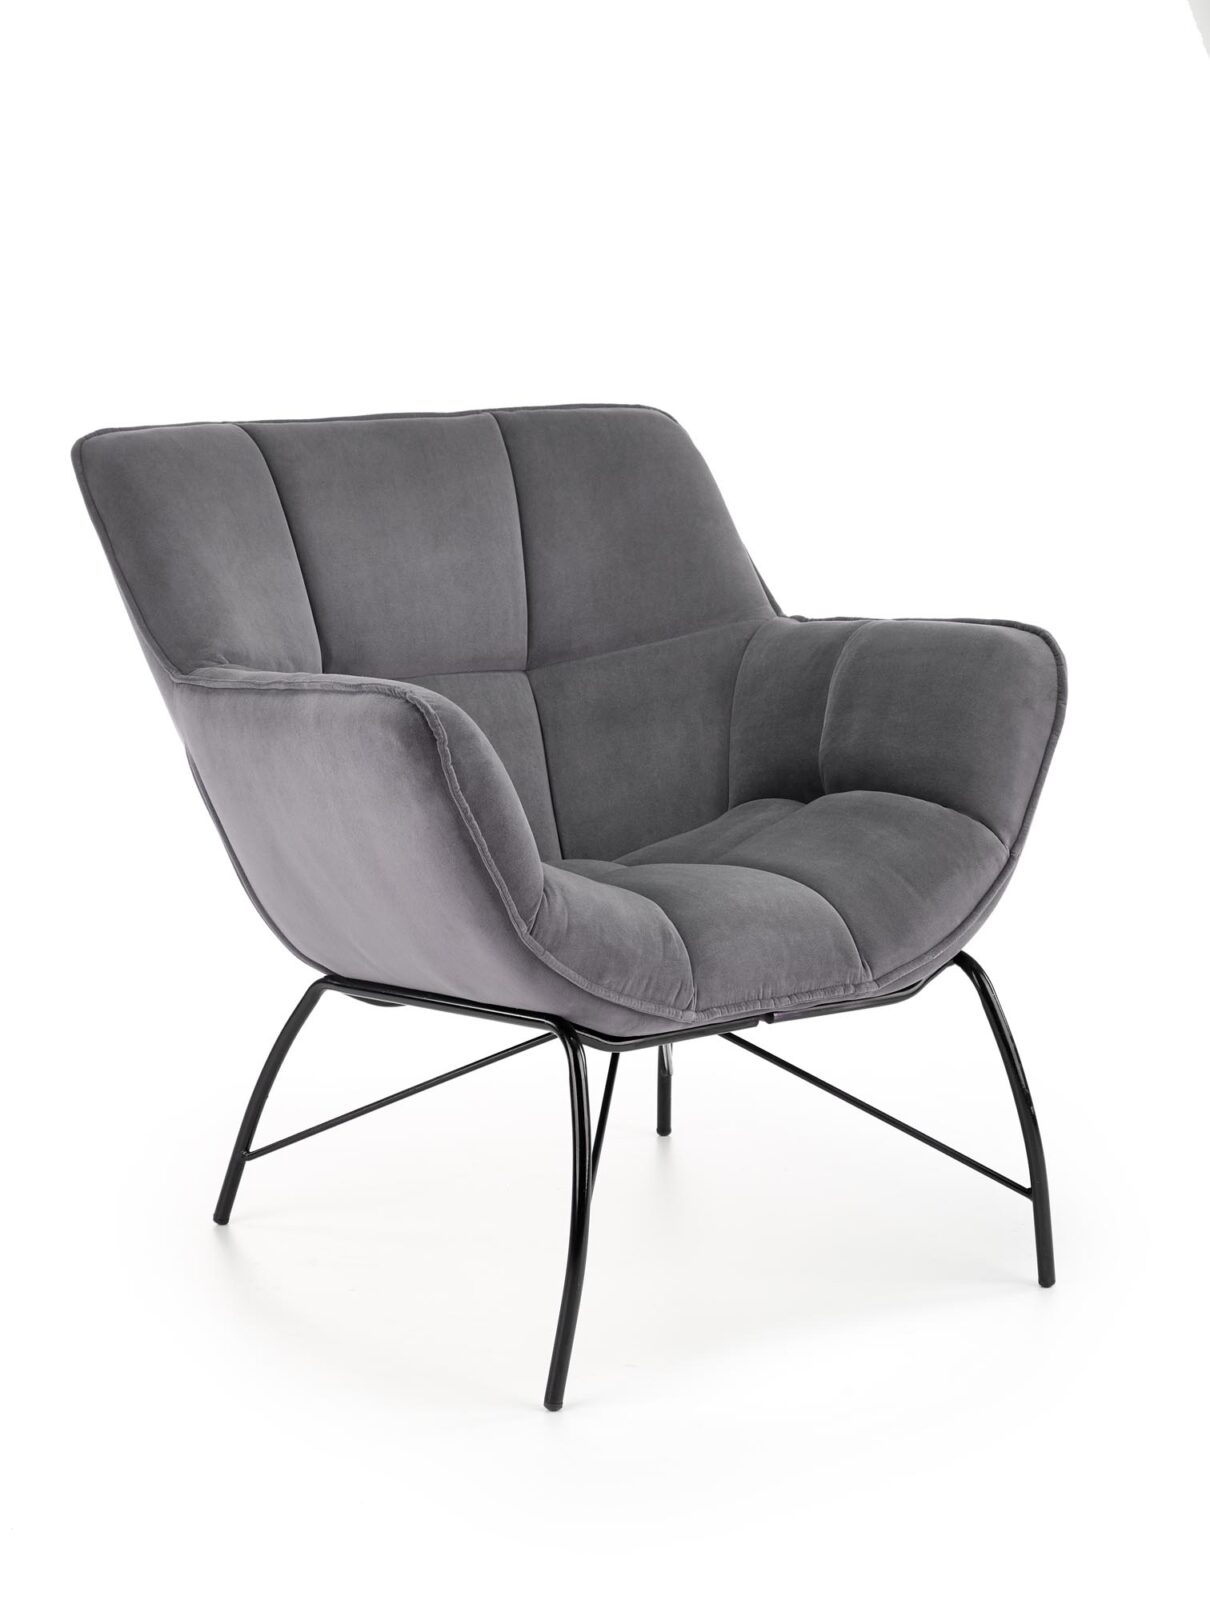 BELTON leisure chair color: grey